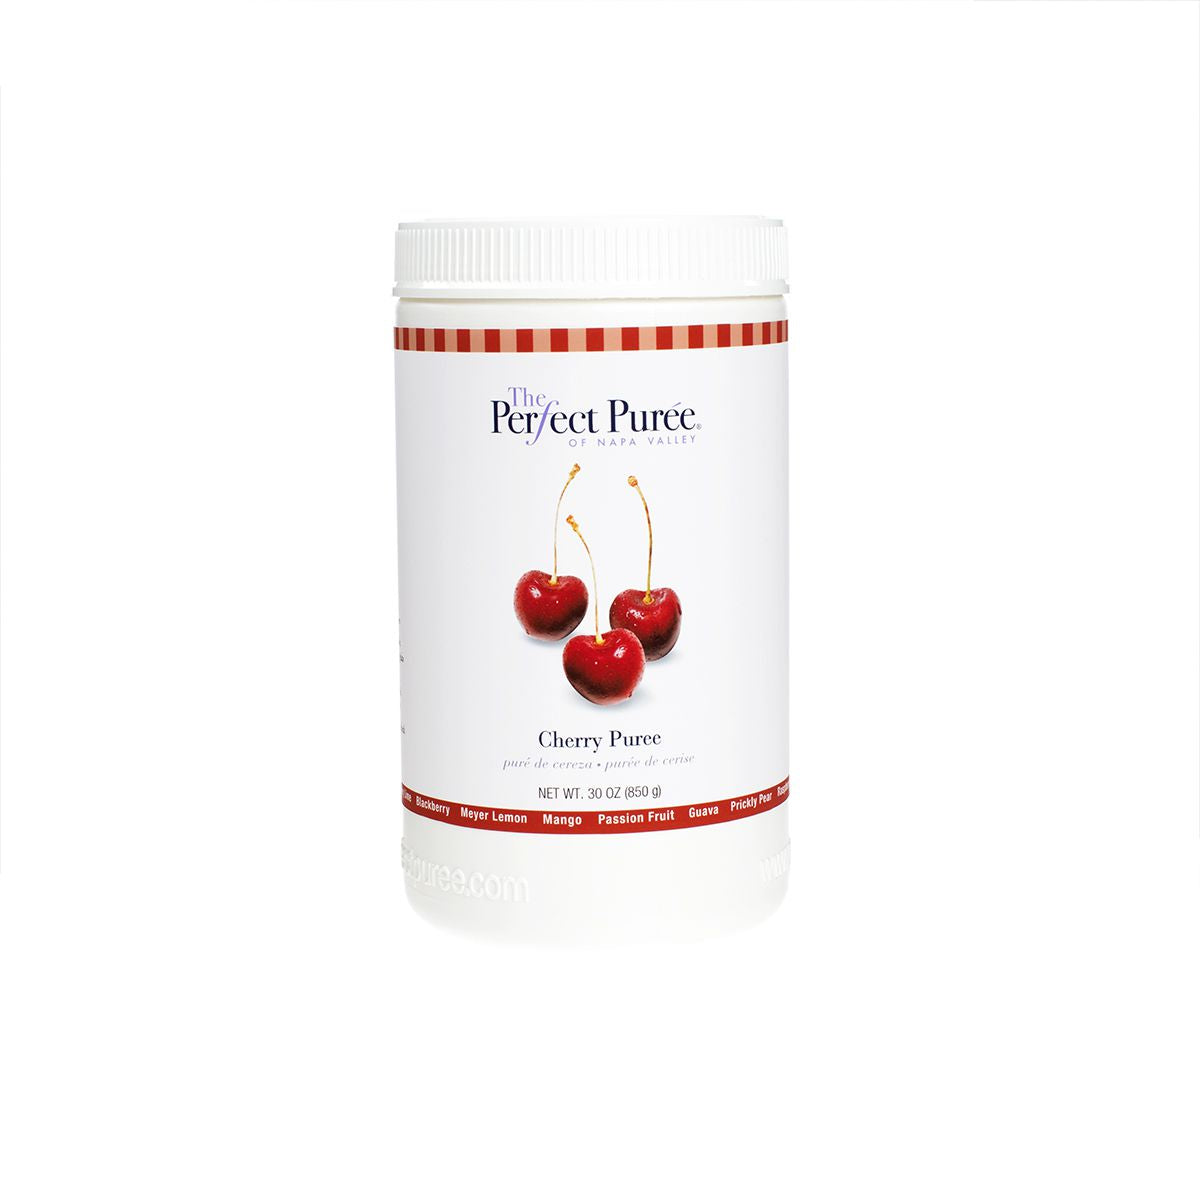 The Perfect Puree Cherry Puree